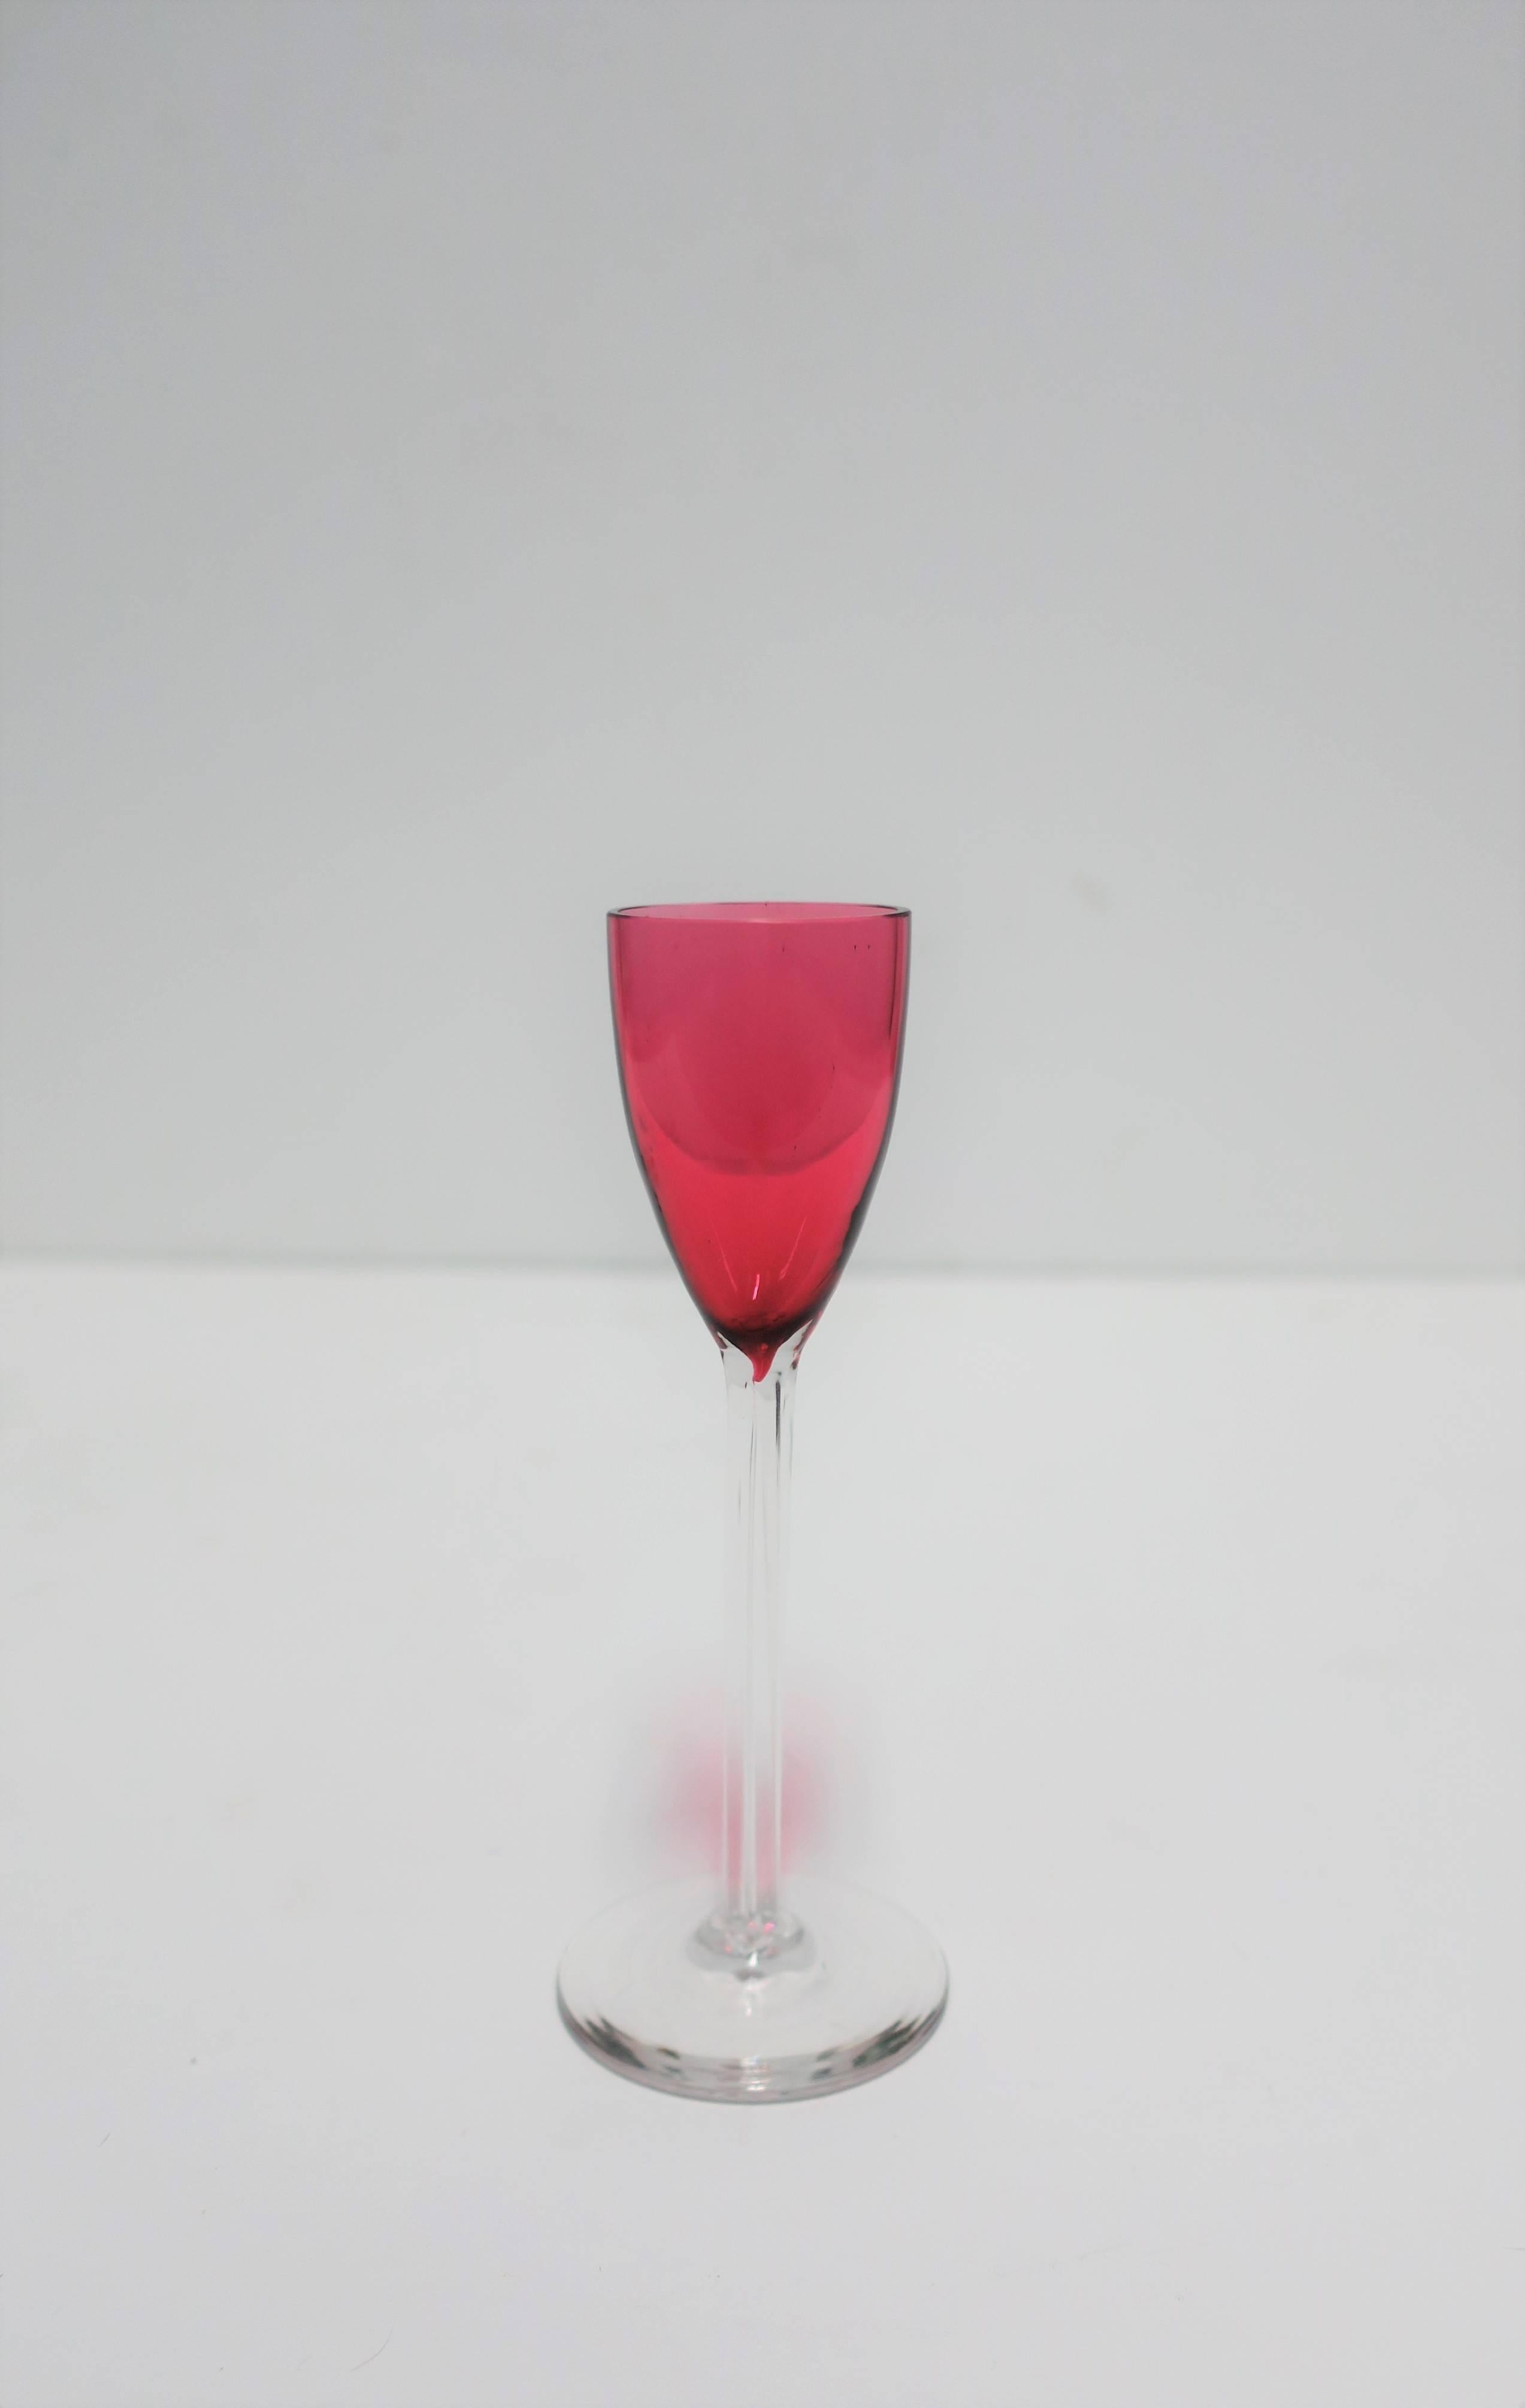 20th Century Colorful Art Glass Cordial or Aperitif Liquor Spirits Glasses